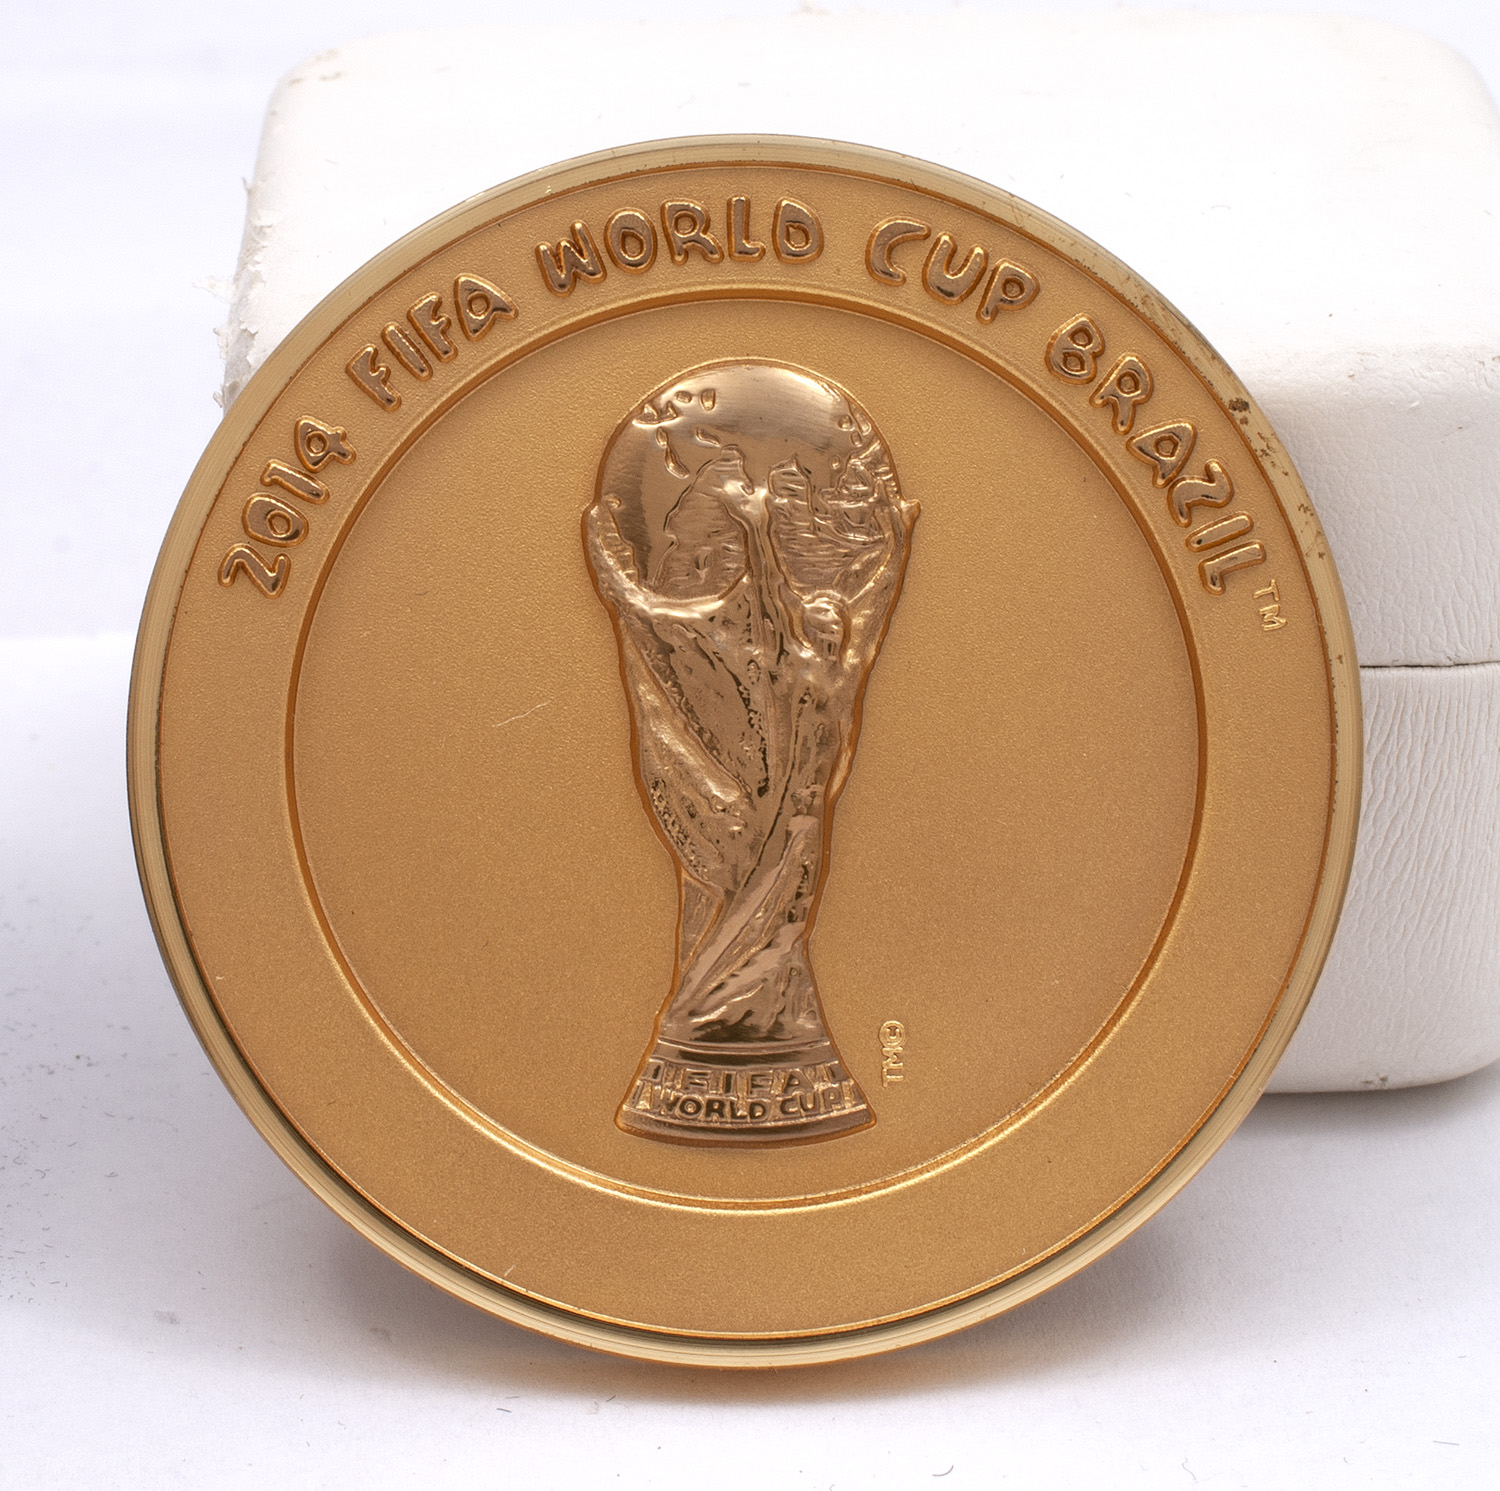 Trophy Award  2014 FIFA World Cup Brazil™